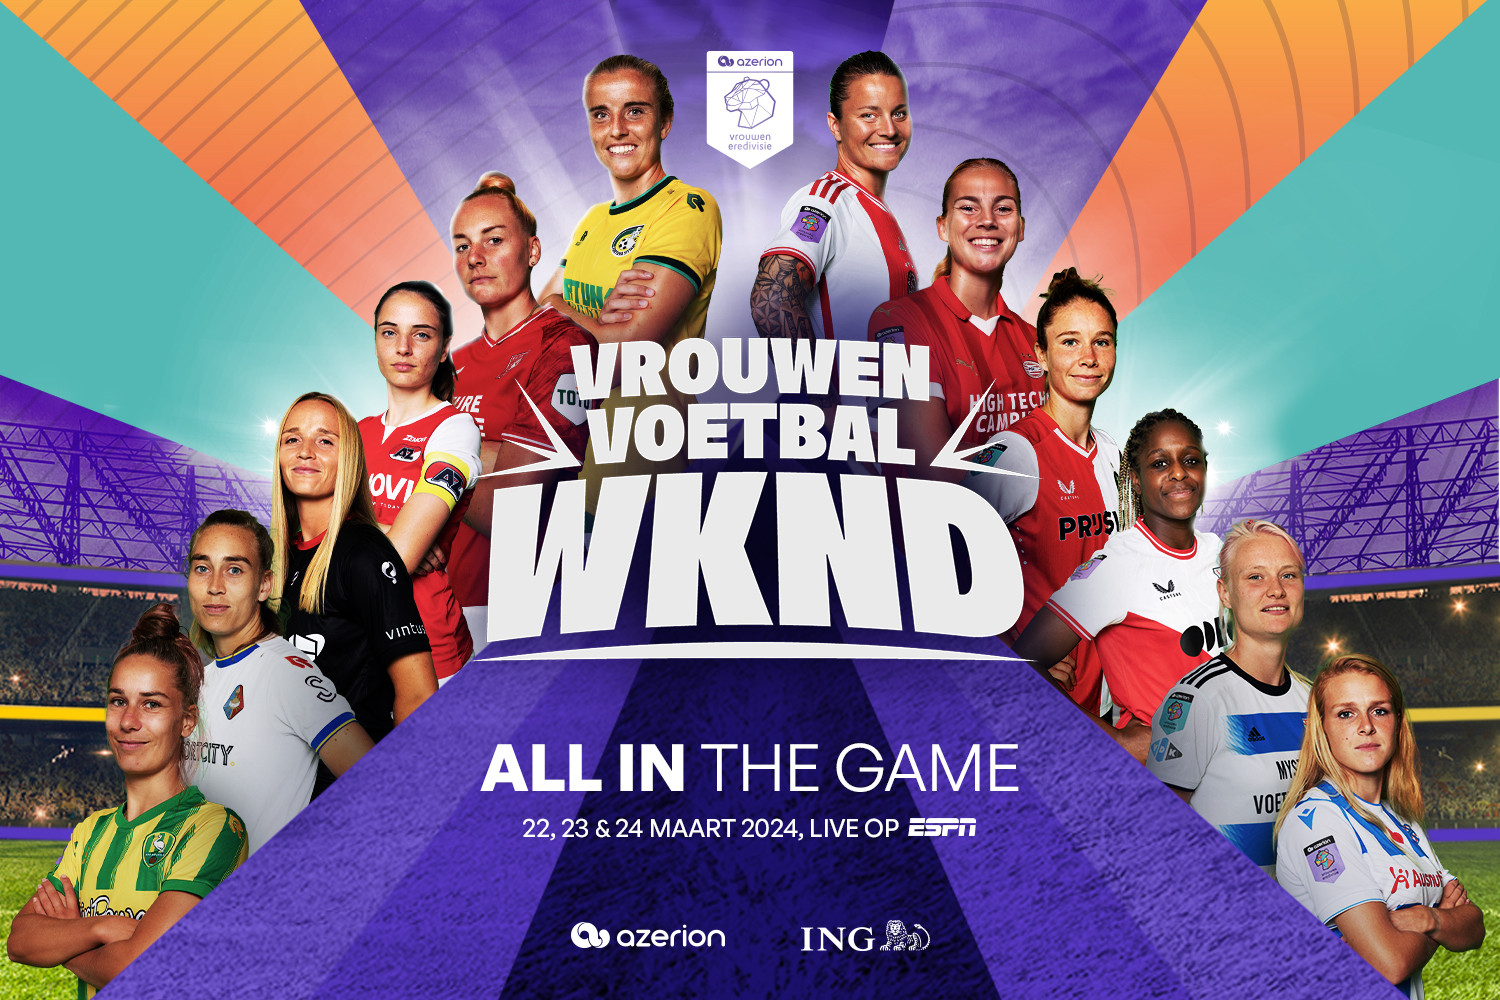 Vrouwenvoetbal WKND